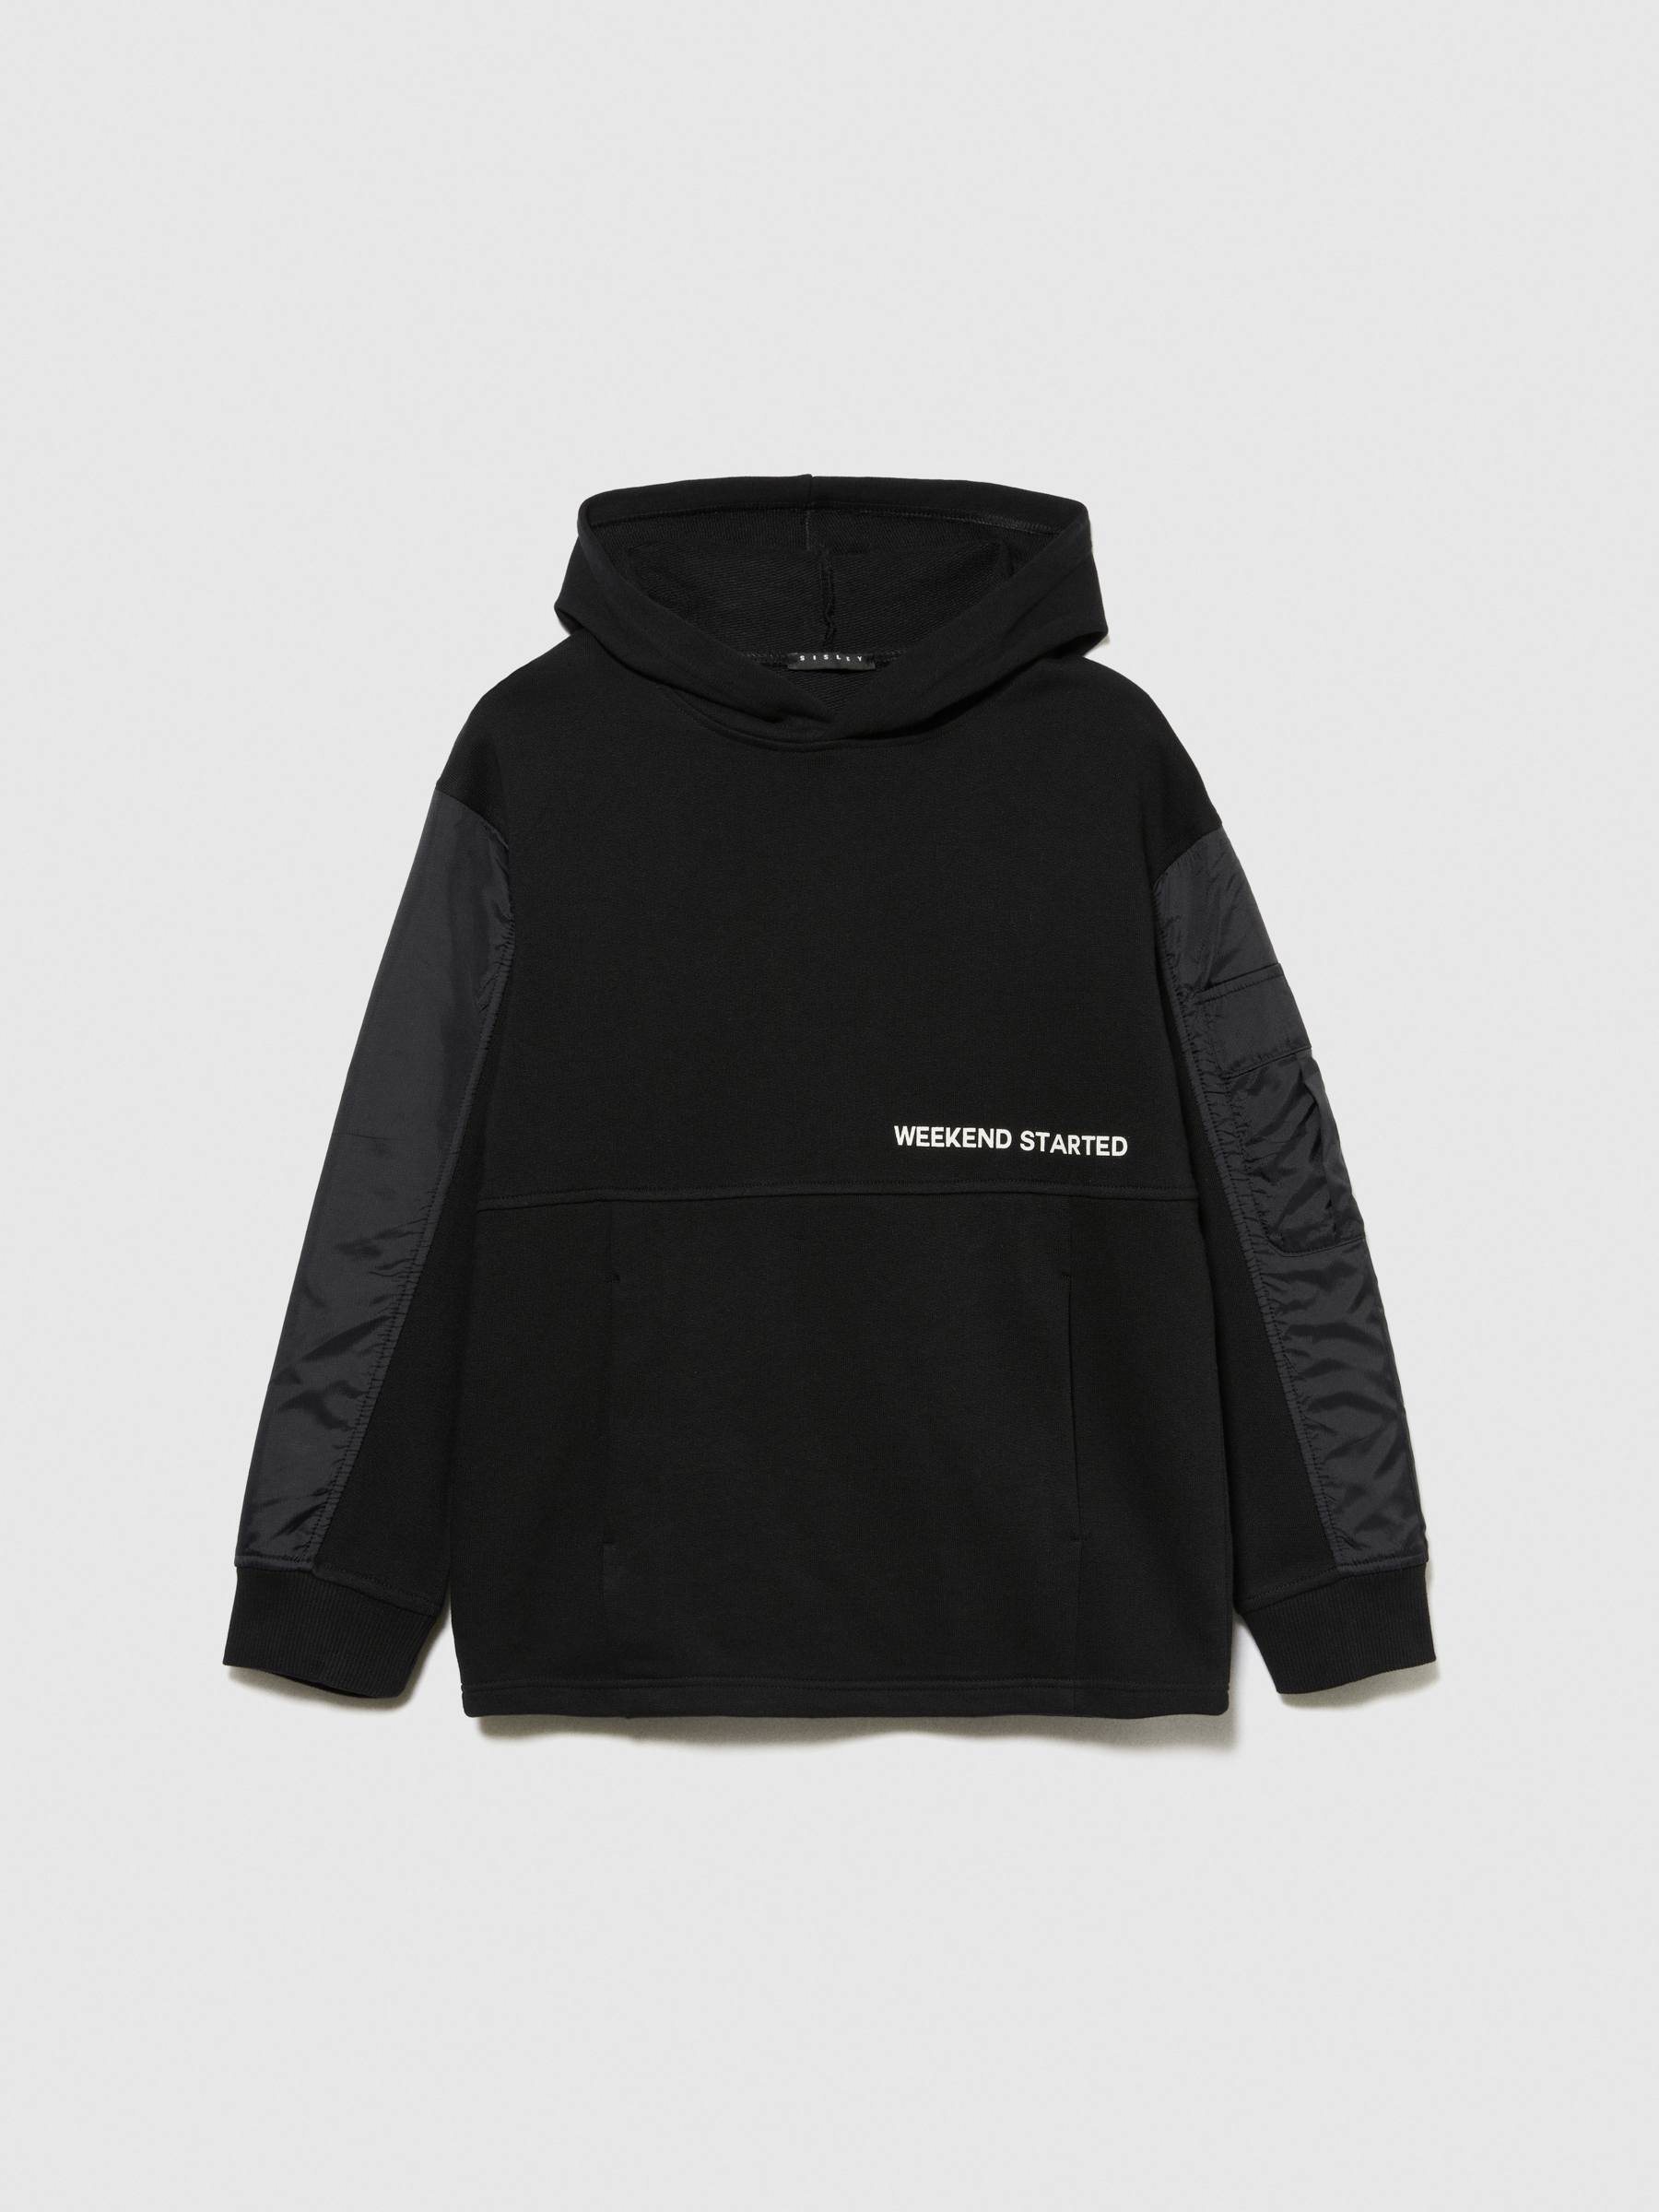 Sisley Young - Mixed Material Sweatshirt With Maxi Print, Man, Black, Size: M